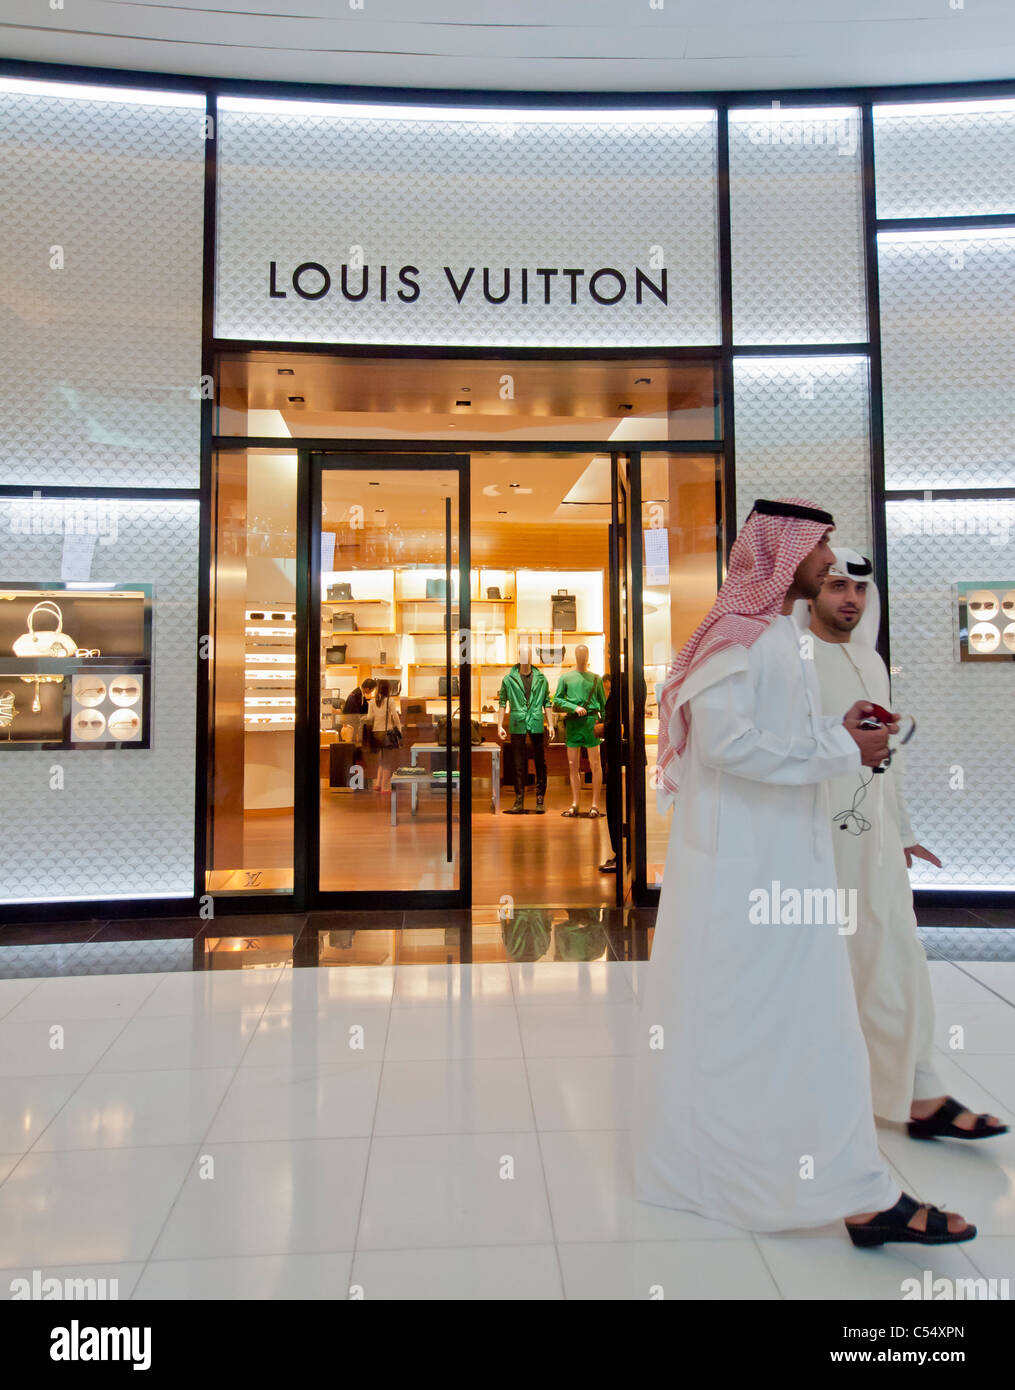 Louis Vuitton Store Stock Photos & Louis Vuitton Store Stock Images - Alamy